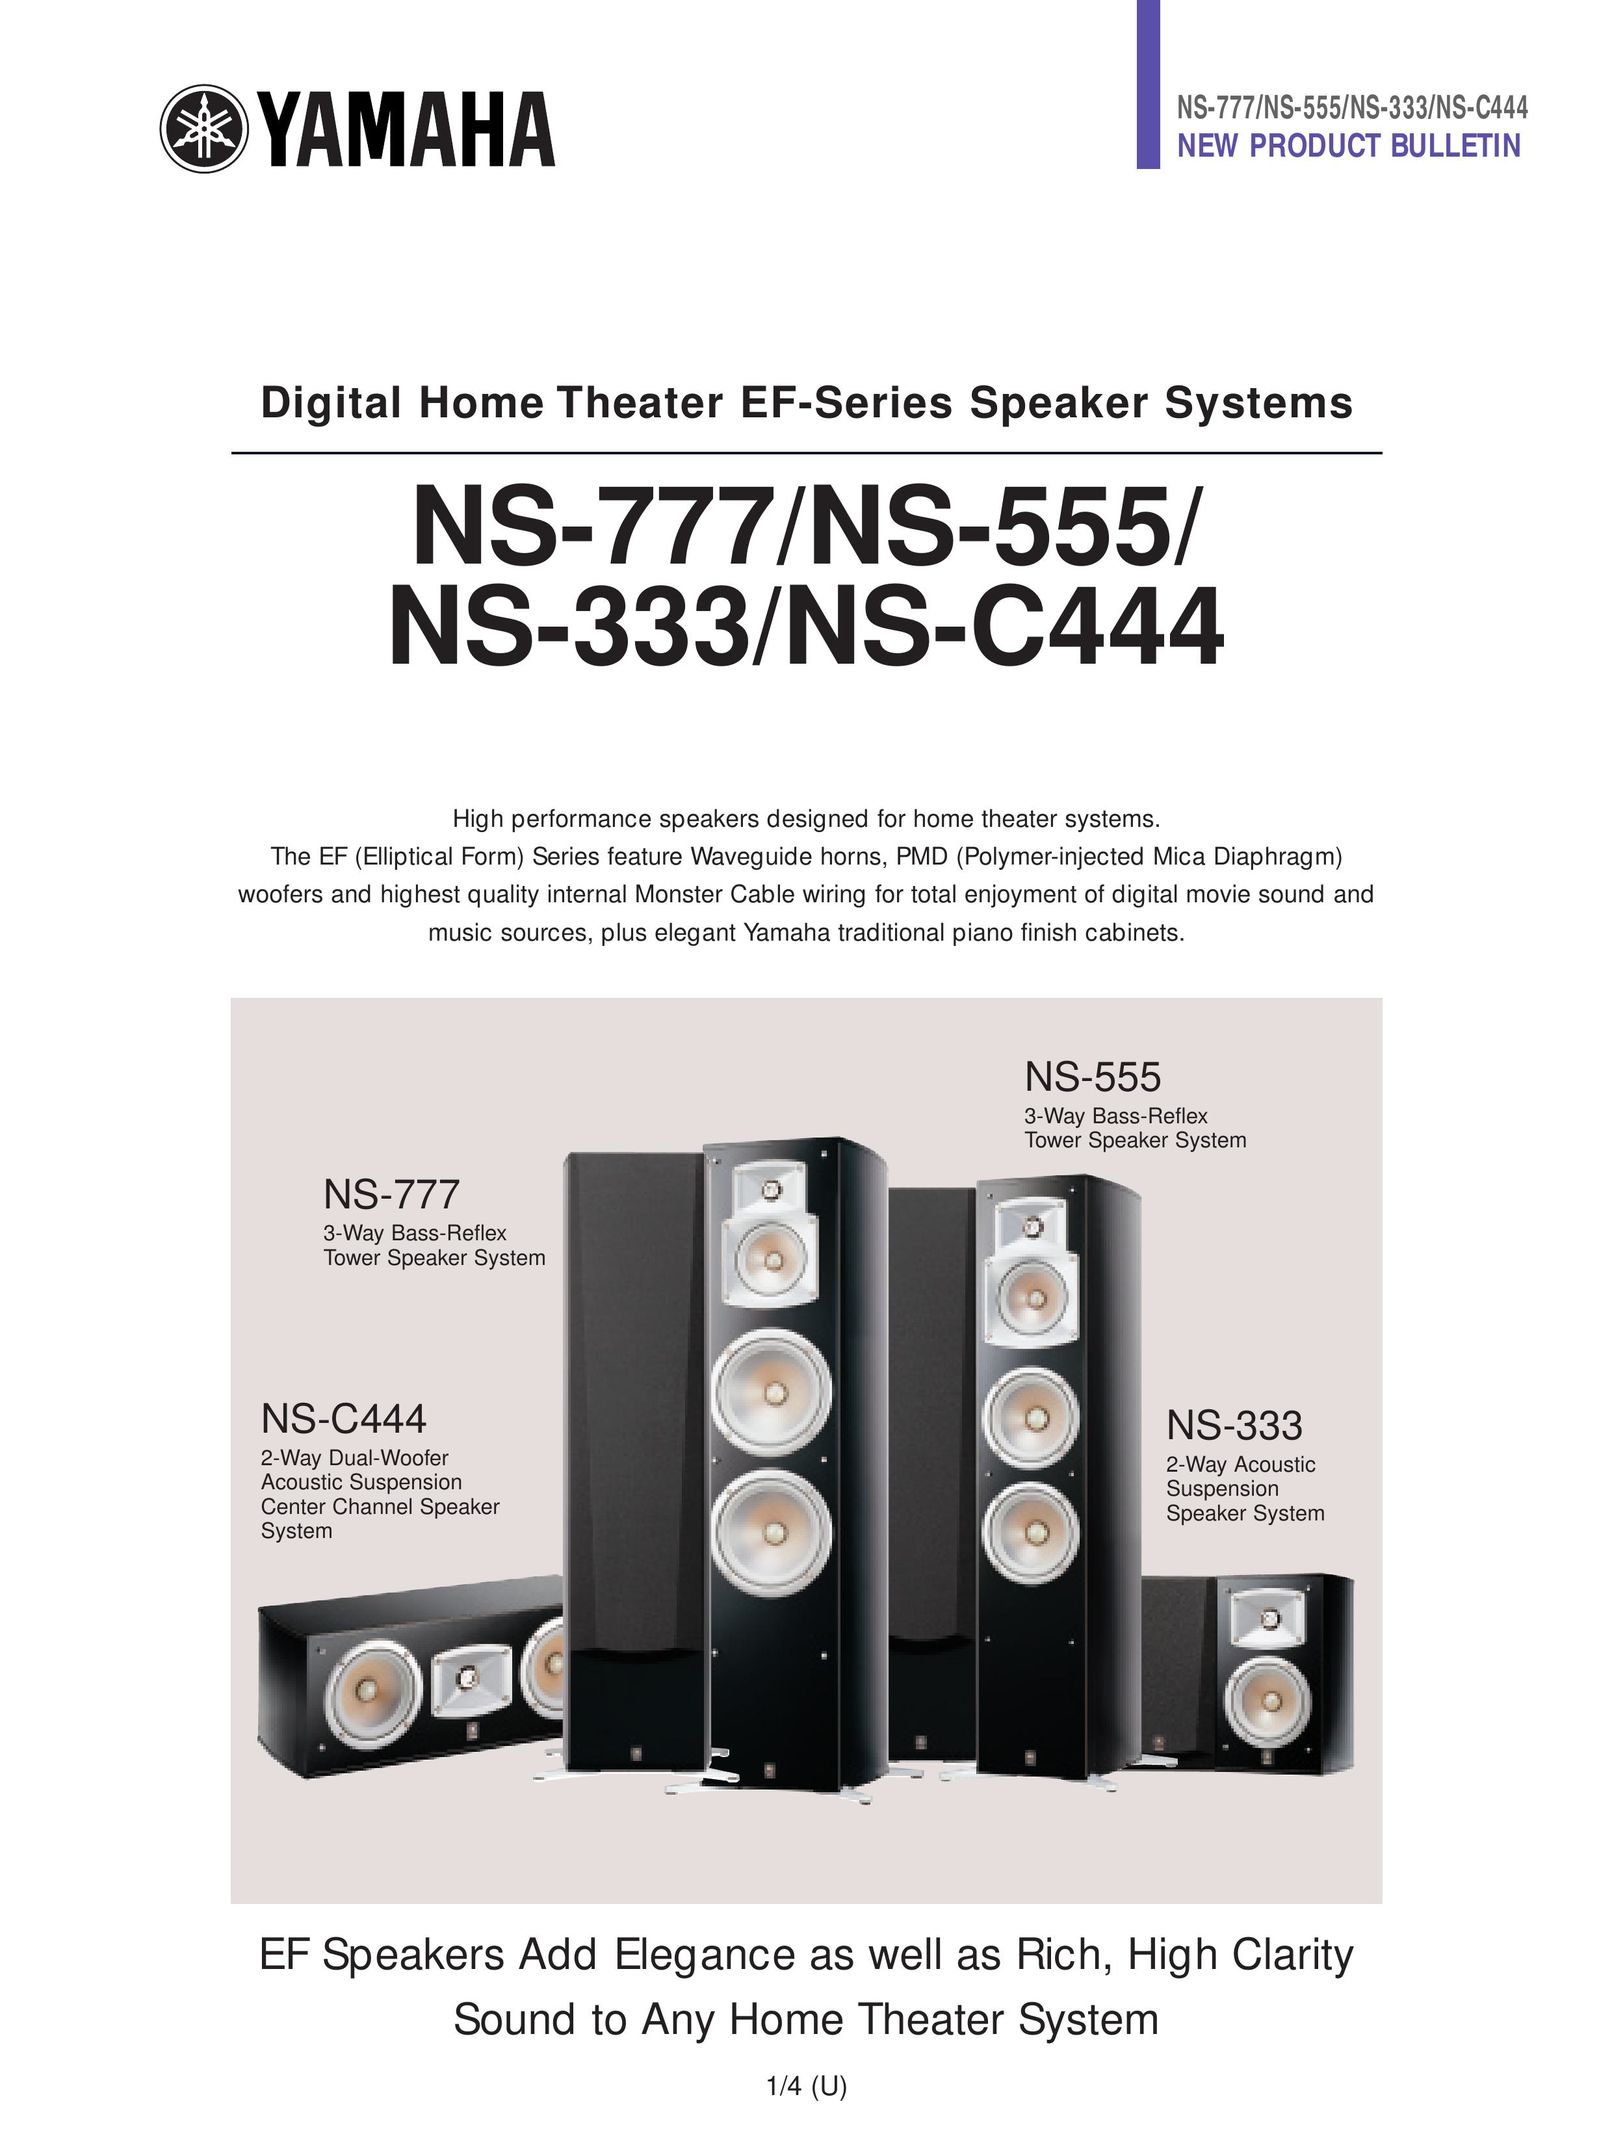 Yamaha NS-777/NS-555 Speaker System User Manual